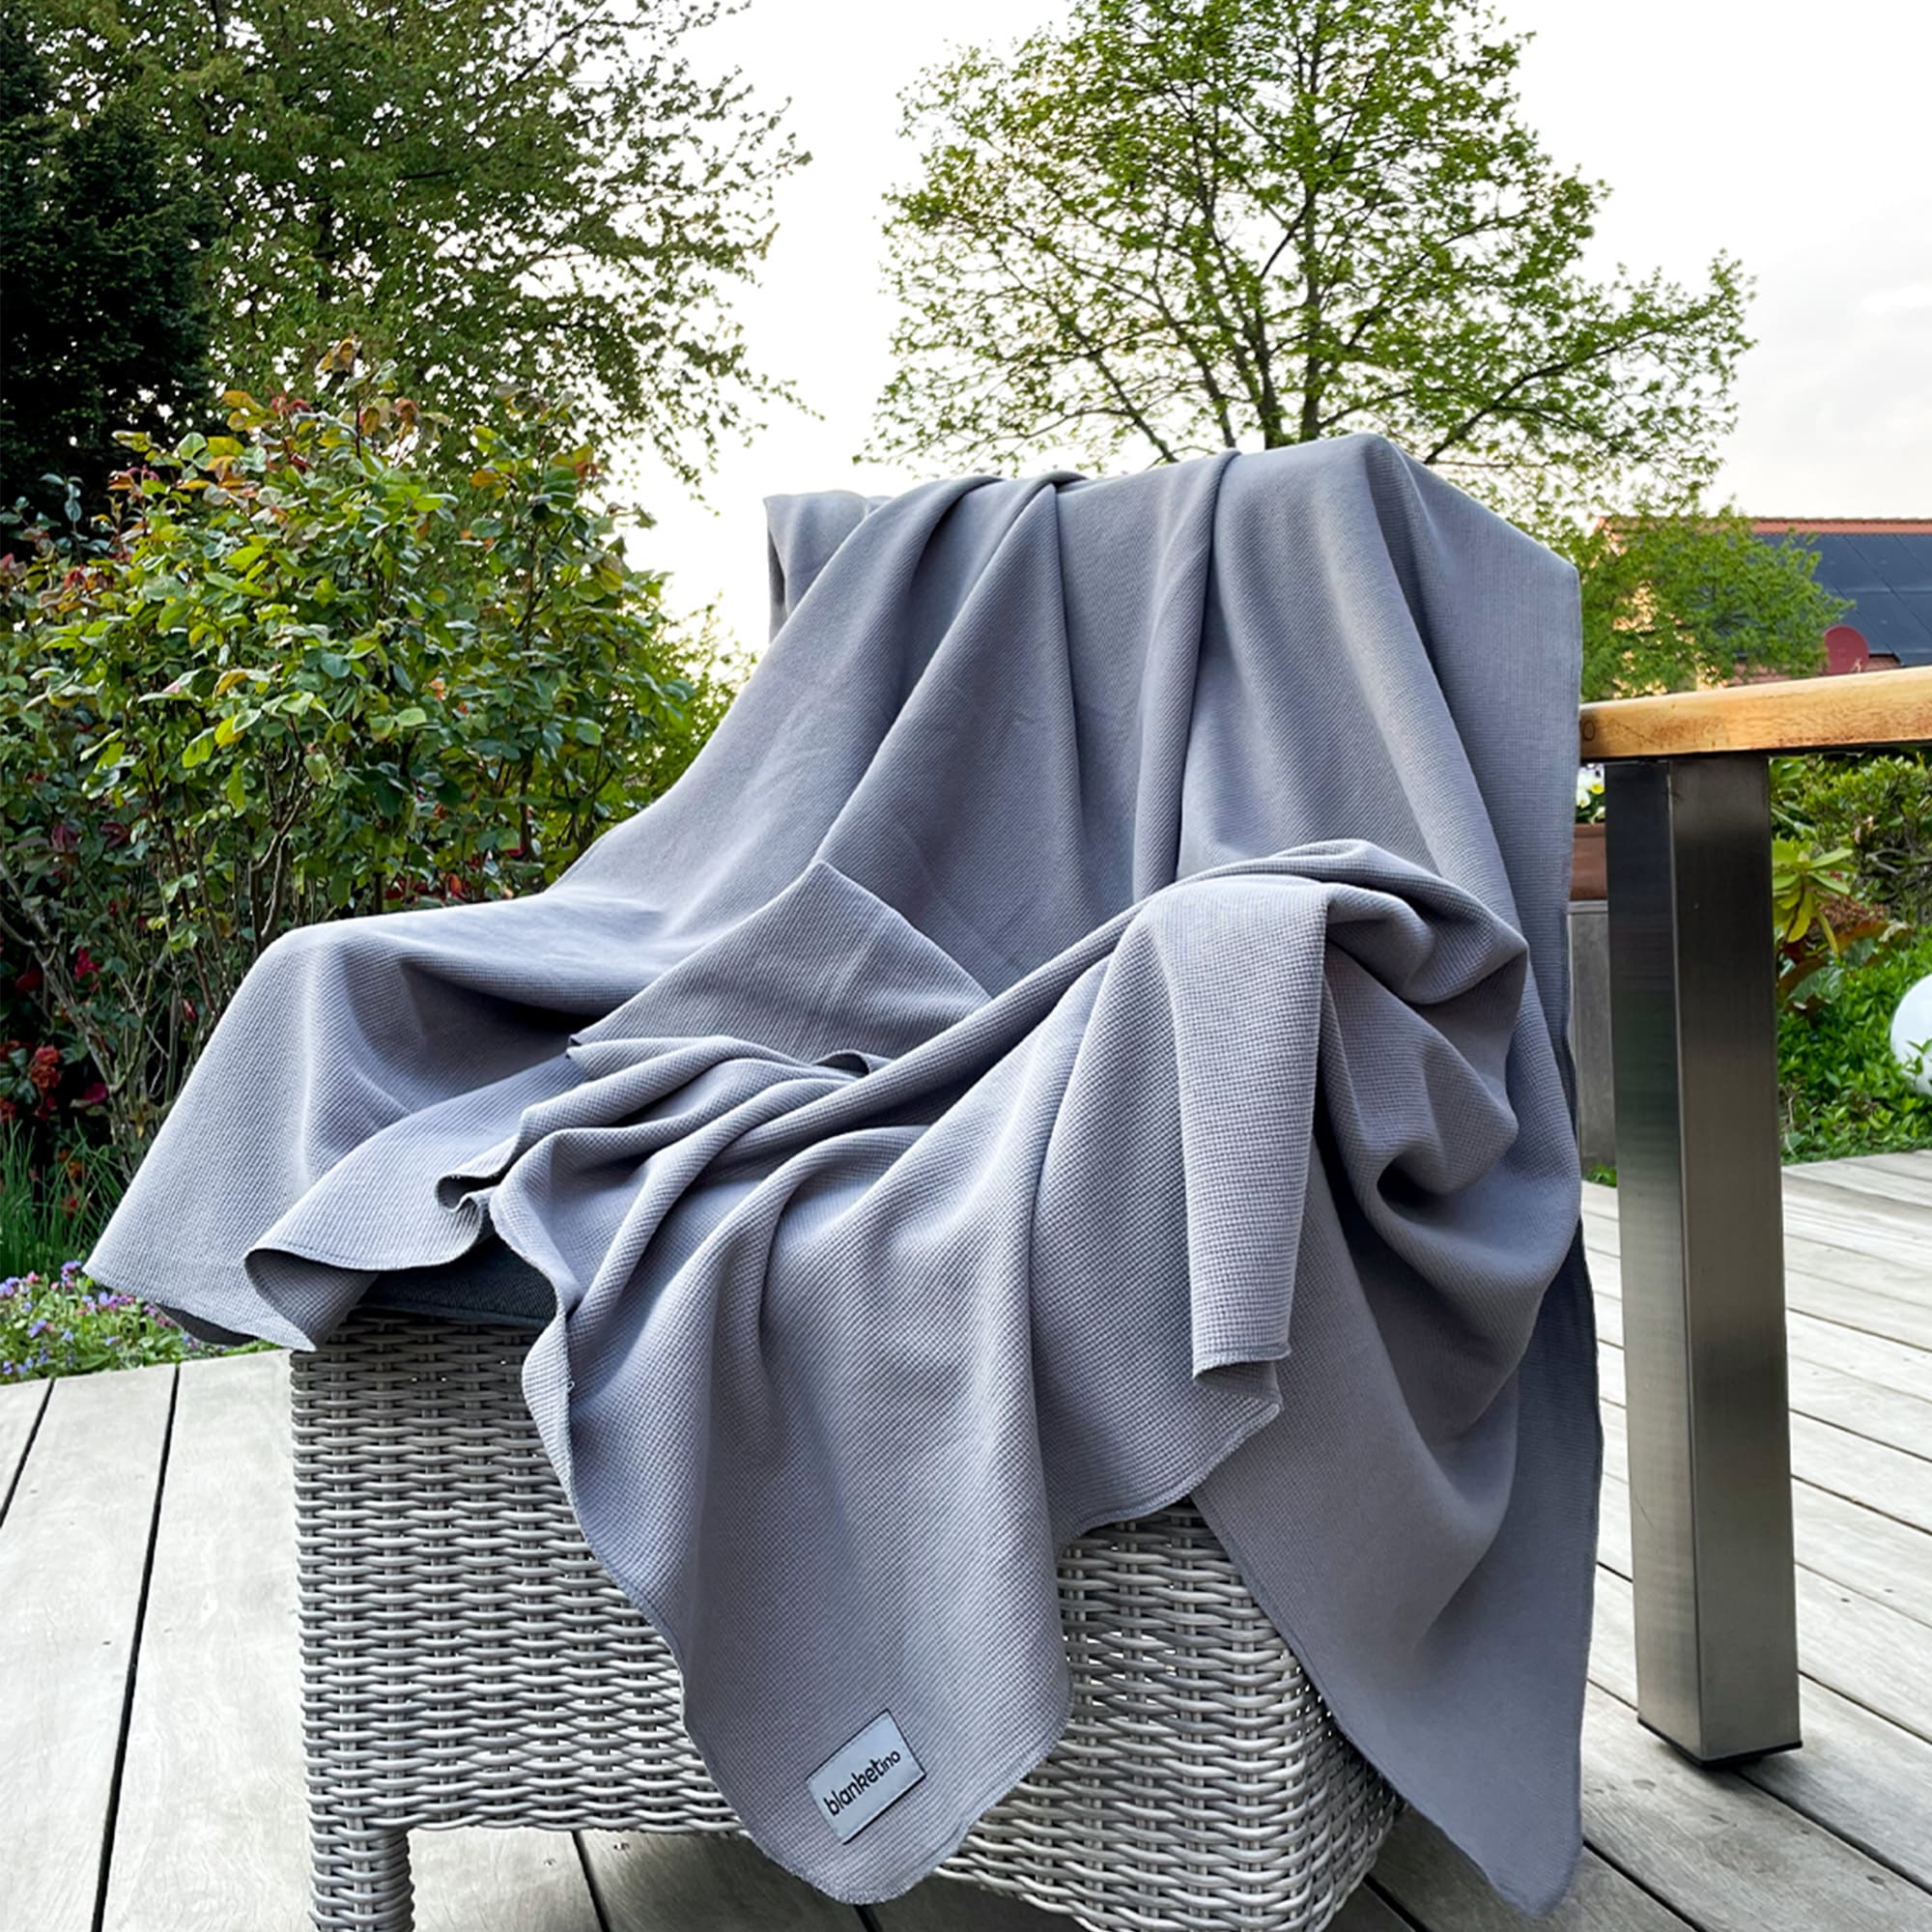 Sommerdecke aus Baumwolle • 150 x 210 cm • Taupe-Grau